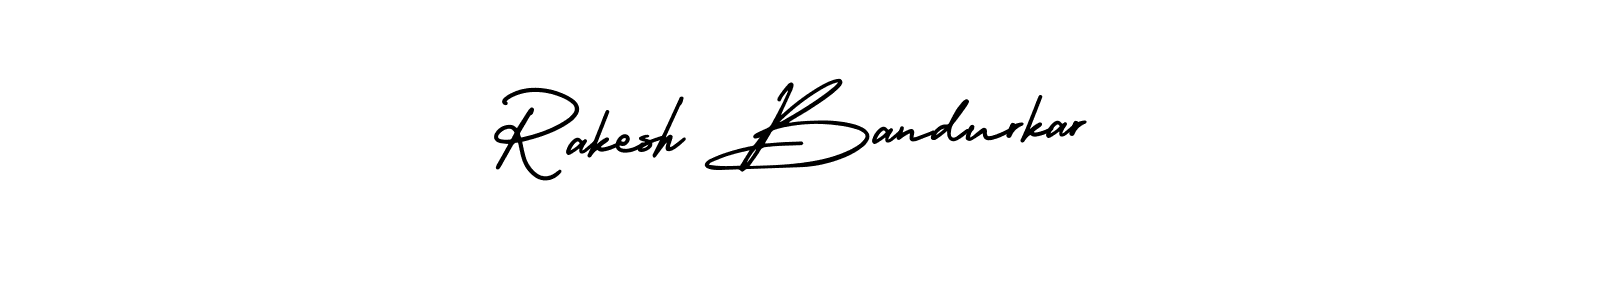 Design your own signature with our free online signature maker. With this signature software, you can create a handwritten (AmerikaSignatureDemo-Regular) signature for name Rakesh Bandurkar. Rakesh Bandurkar signature style 3 images and pictures png